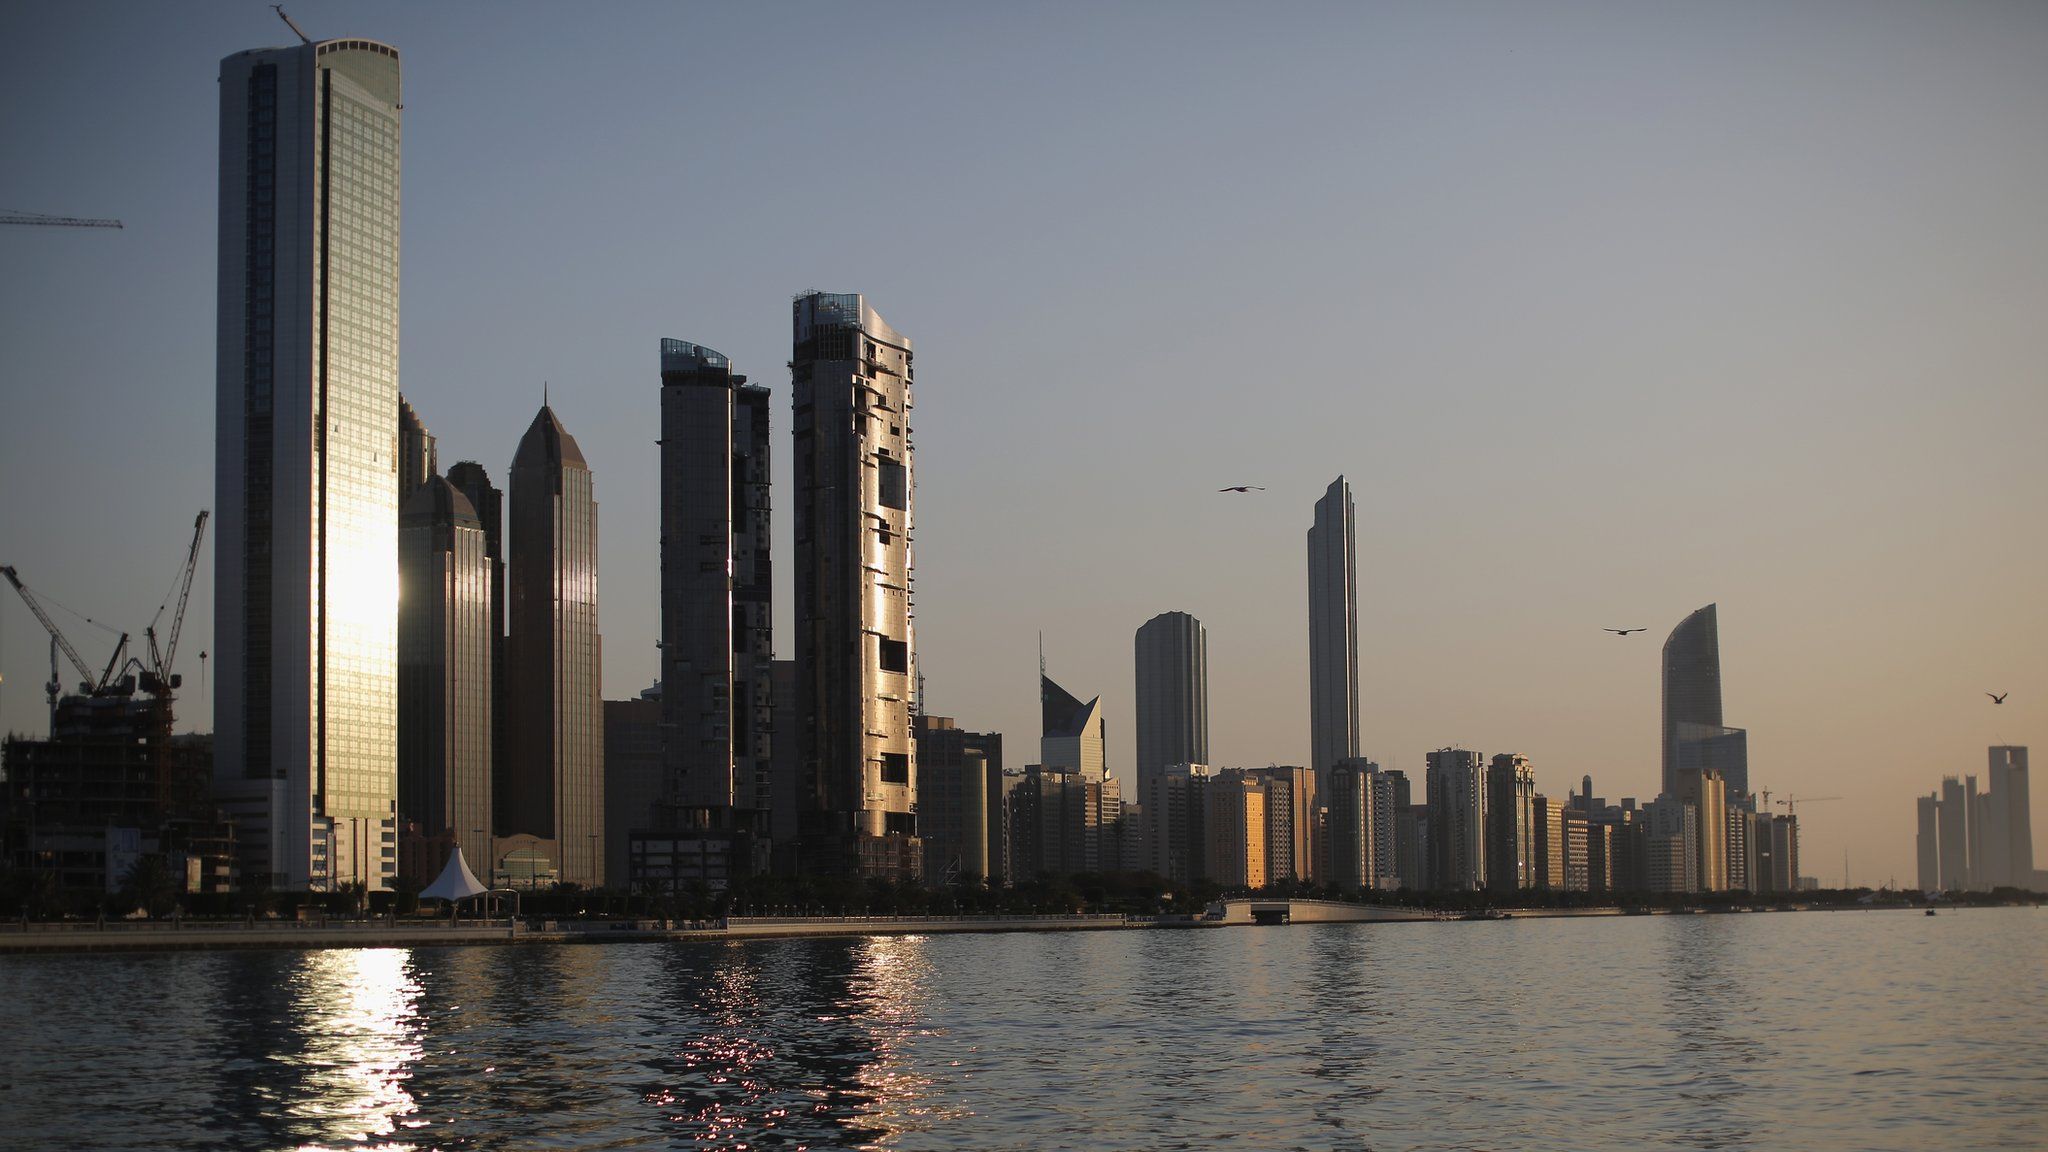 Abu Dhabi skyline (5 February 2015)